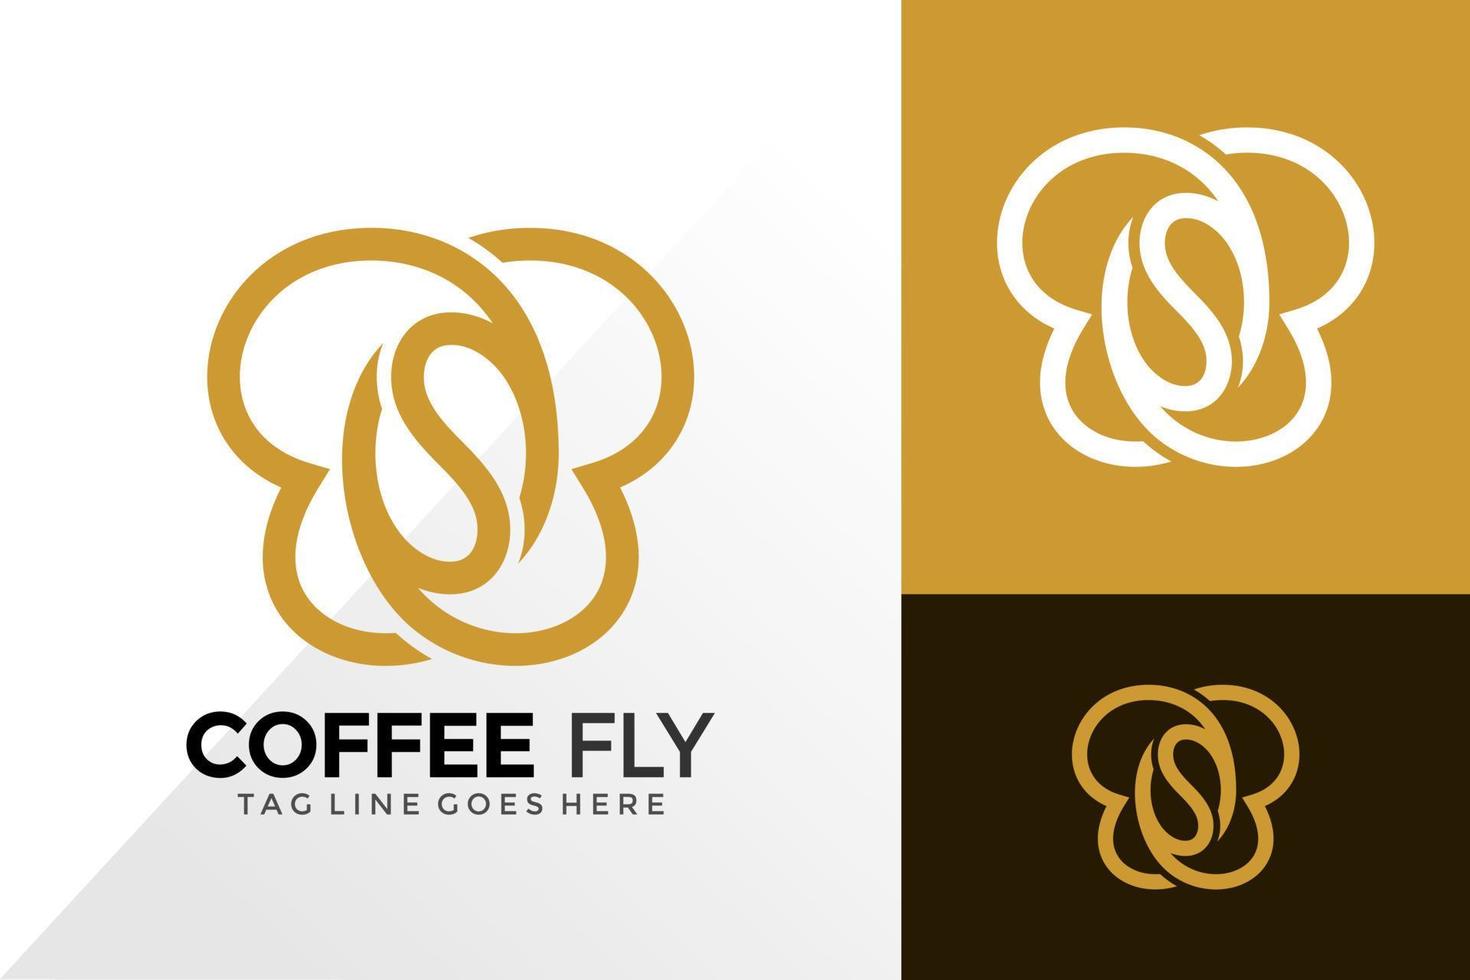 Schmetterlings- und Kaffeelogodesign, Markenidentitätslogos entwirft Vektorillustrationsschablone vektor